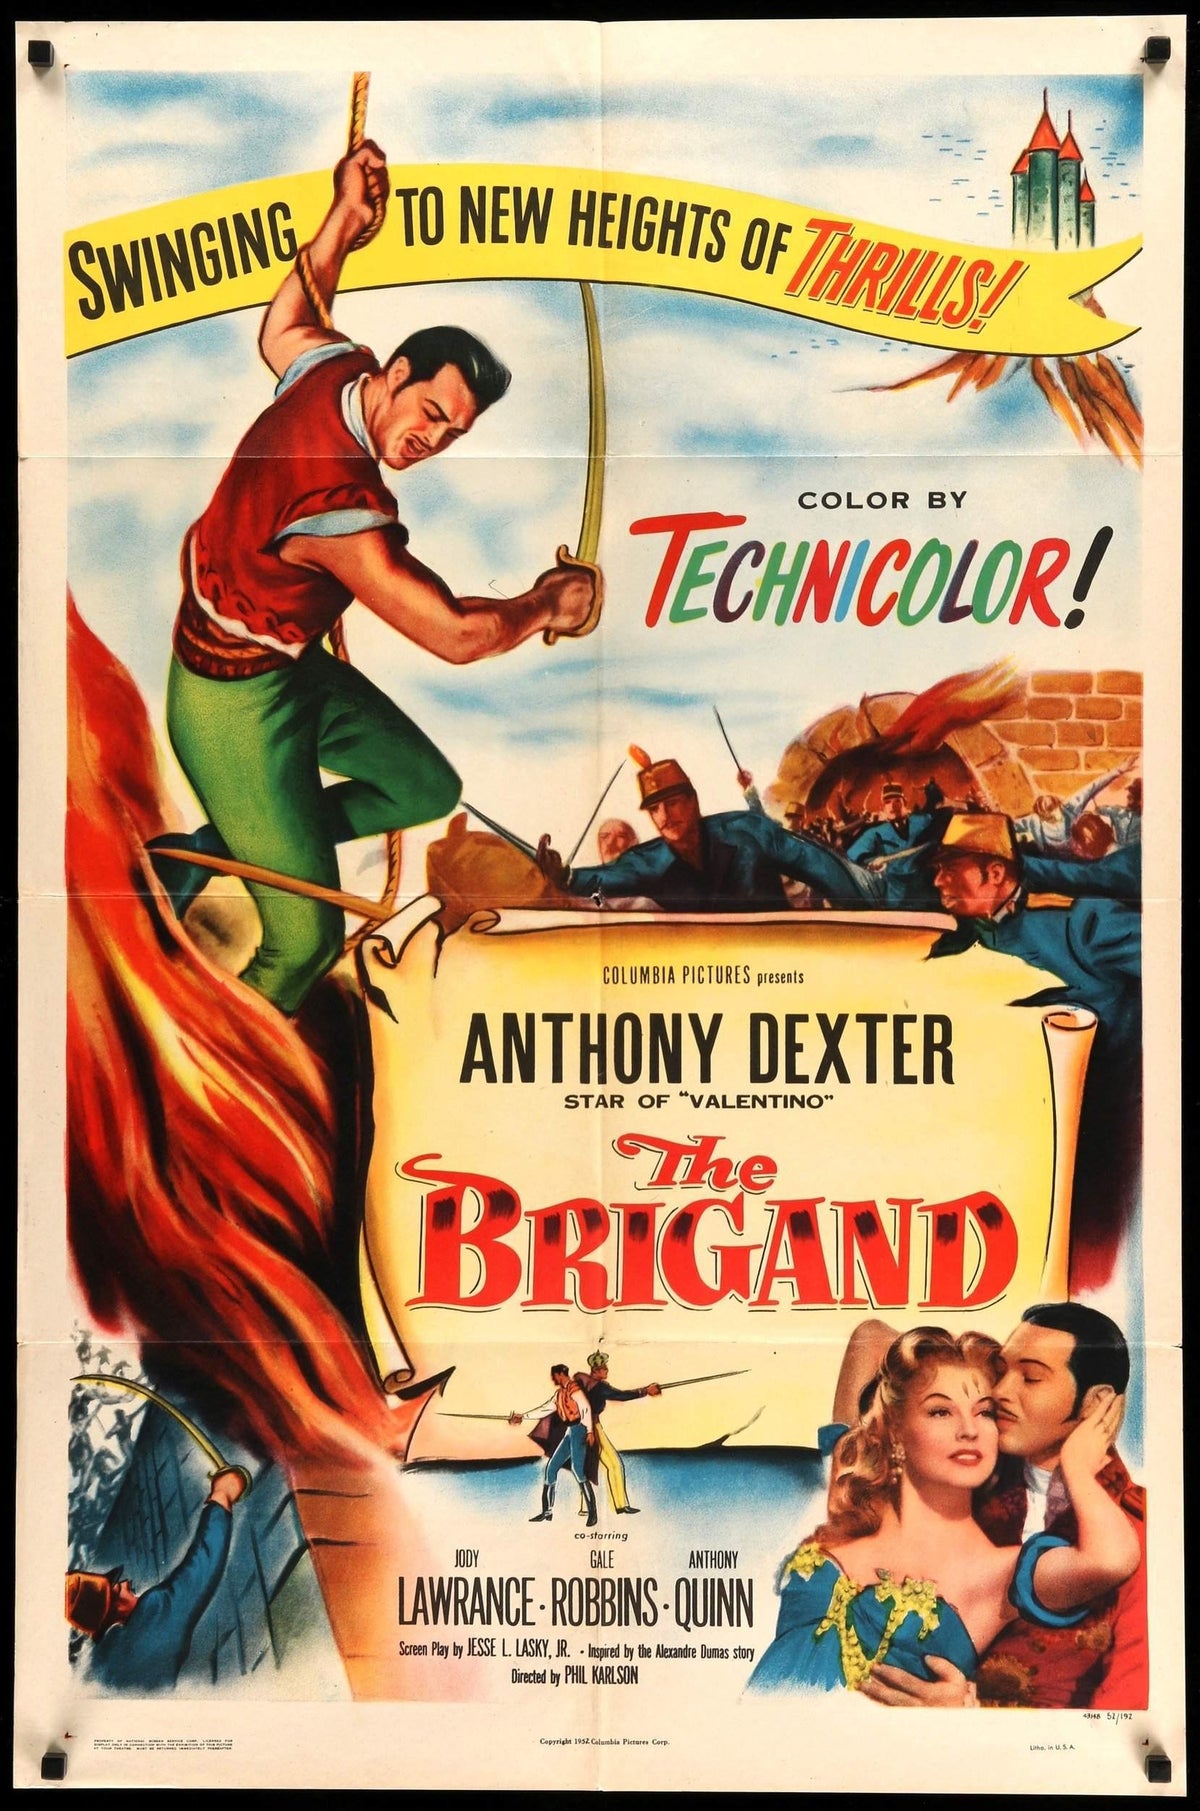 Brigand (1952) original movie poster for sale at Original Film Art